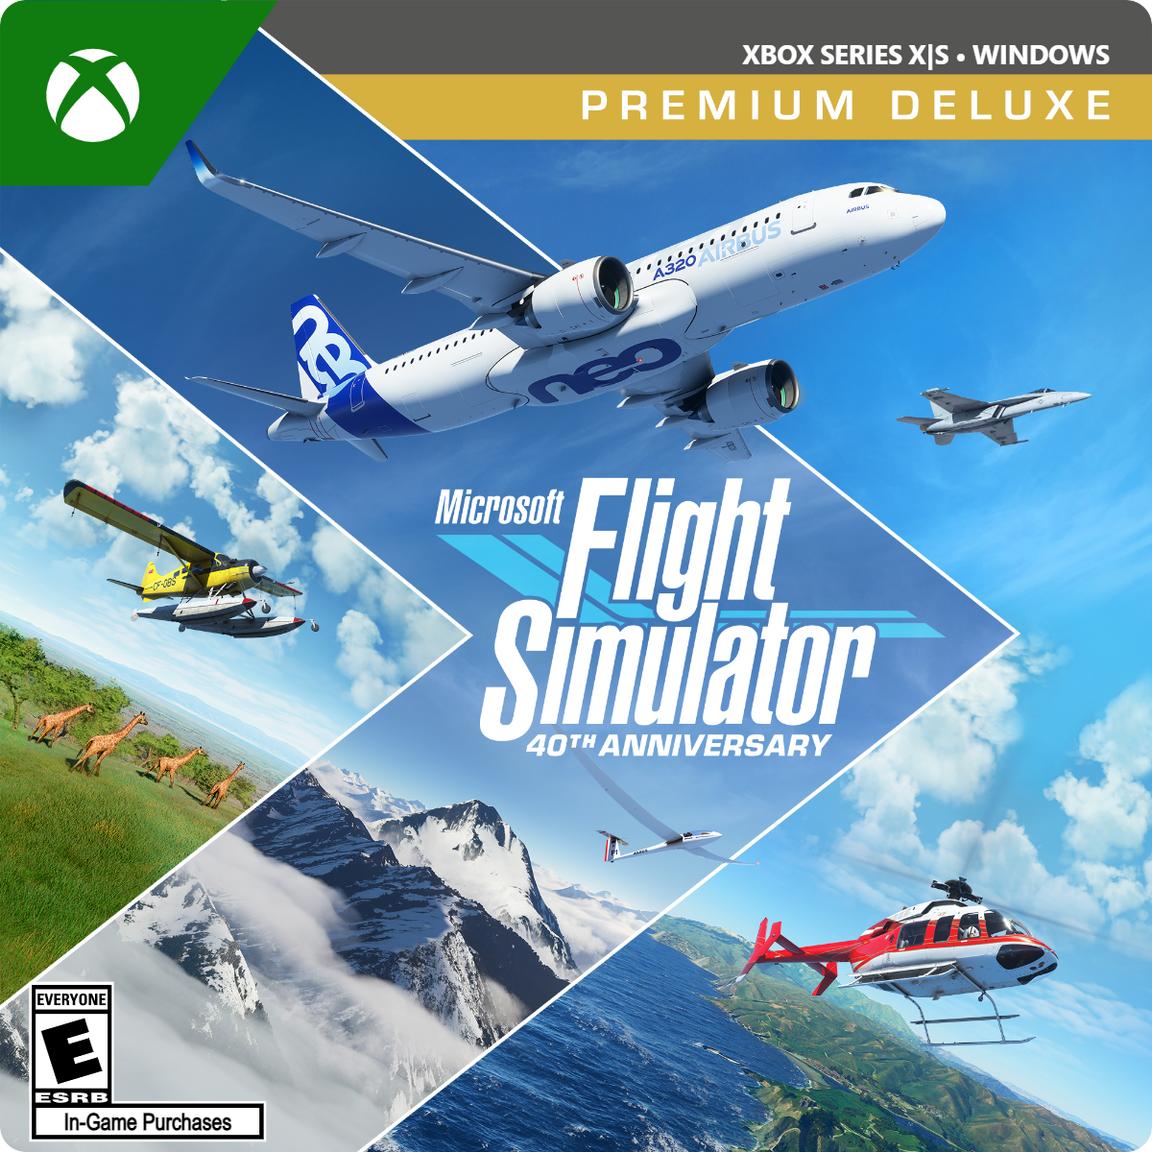 Microsoft Flight Simulator Premium Deluxe 40th Anniversary Edition - Xbox Series X/S and Windows -  G7Q-00135